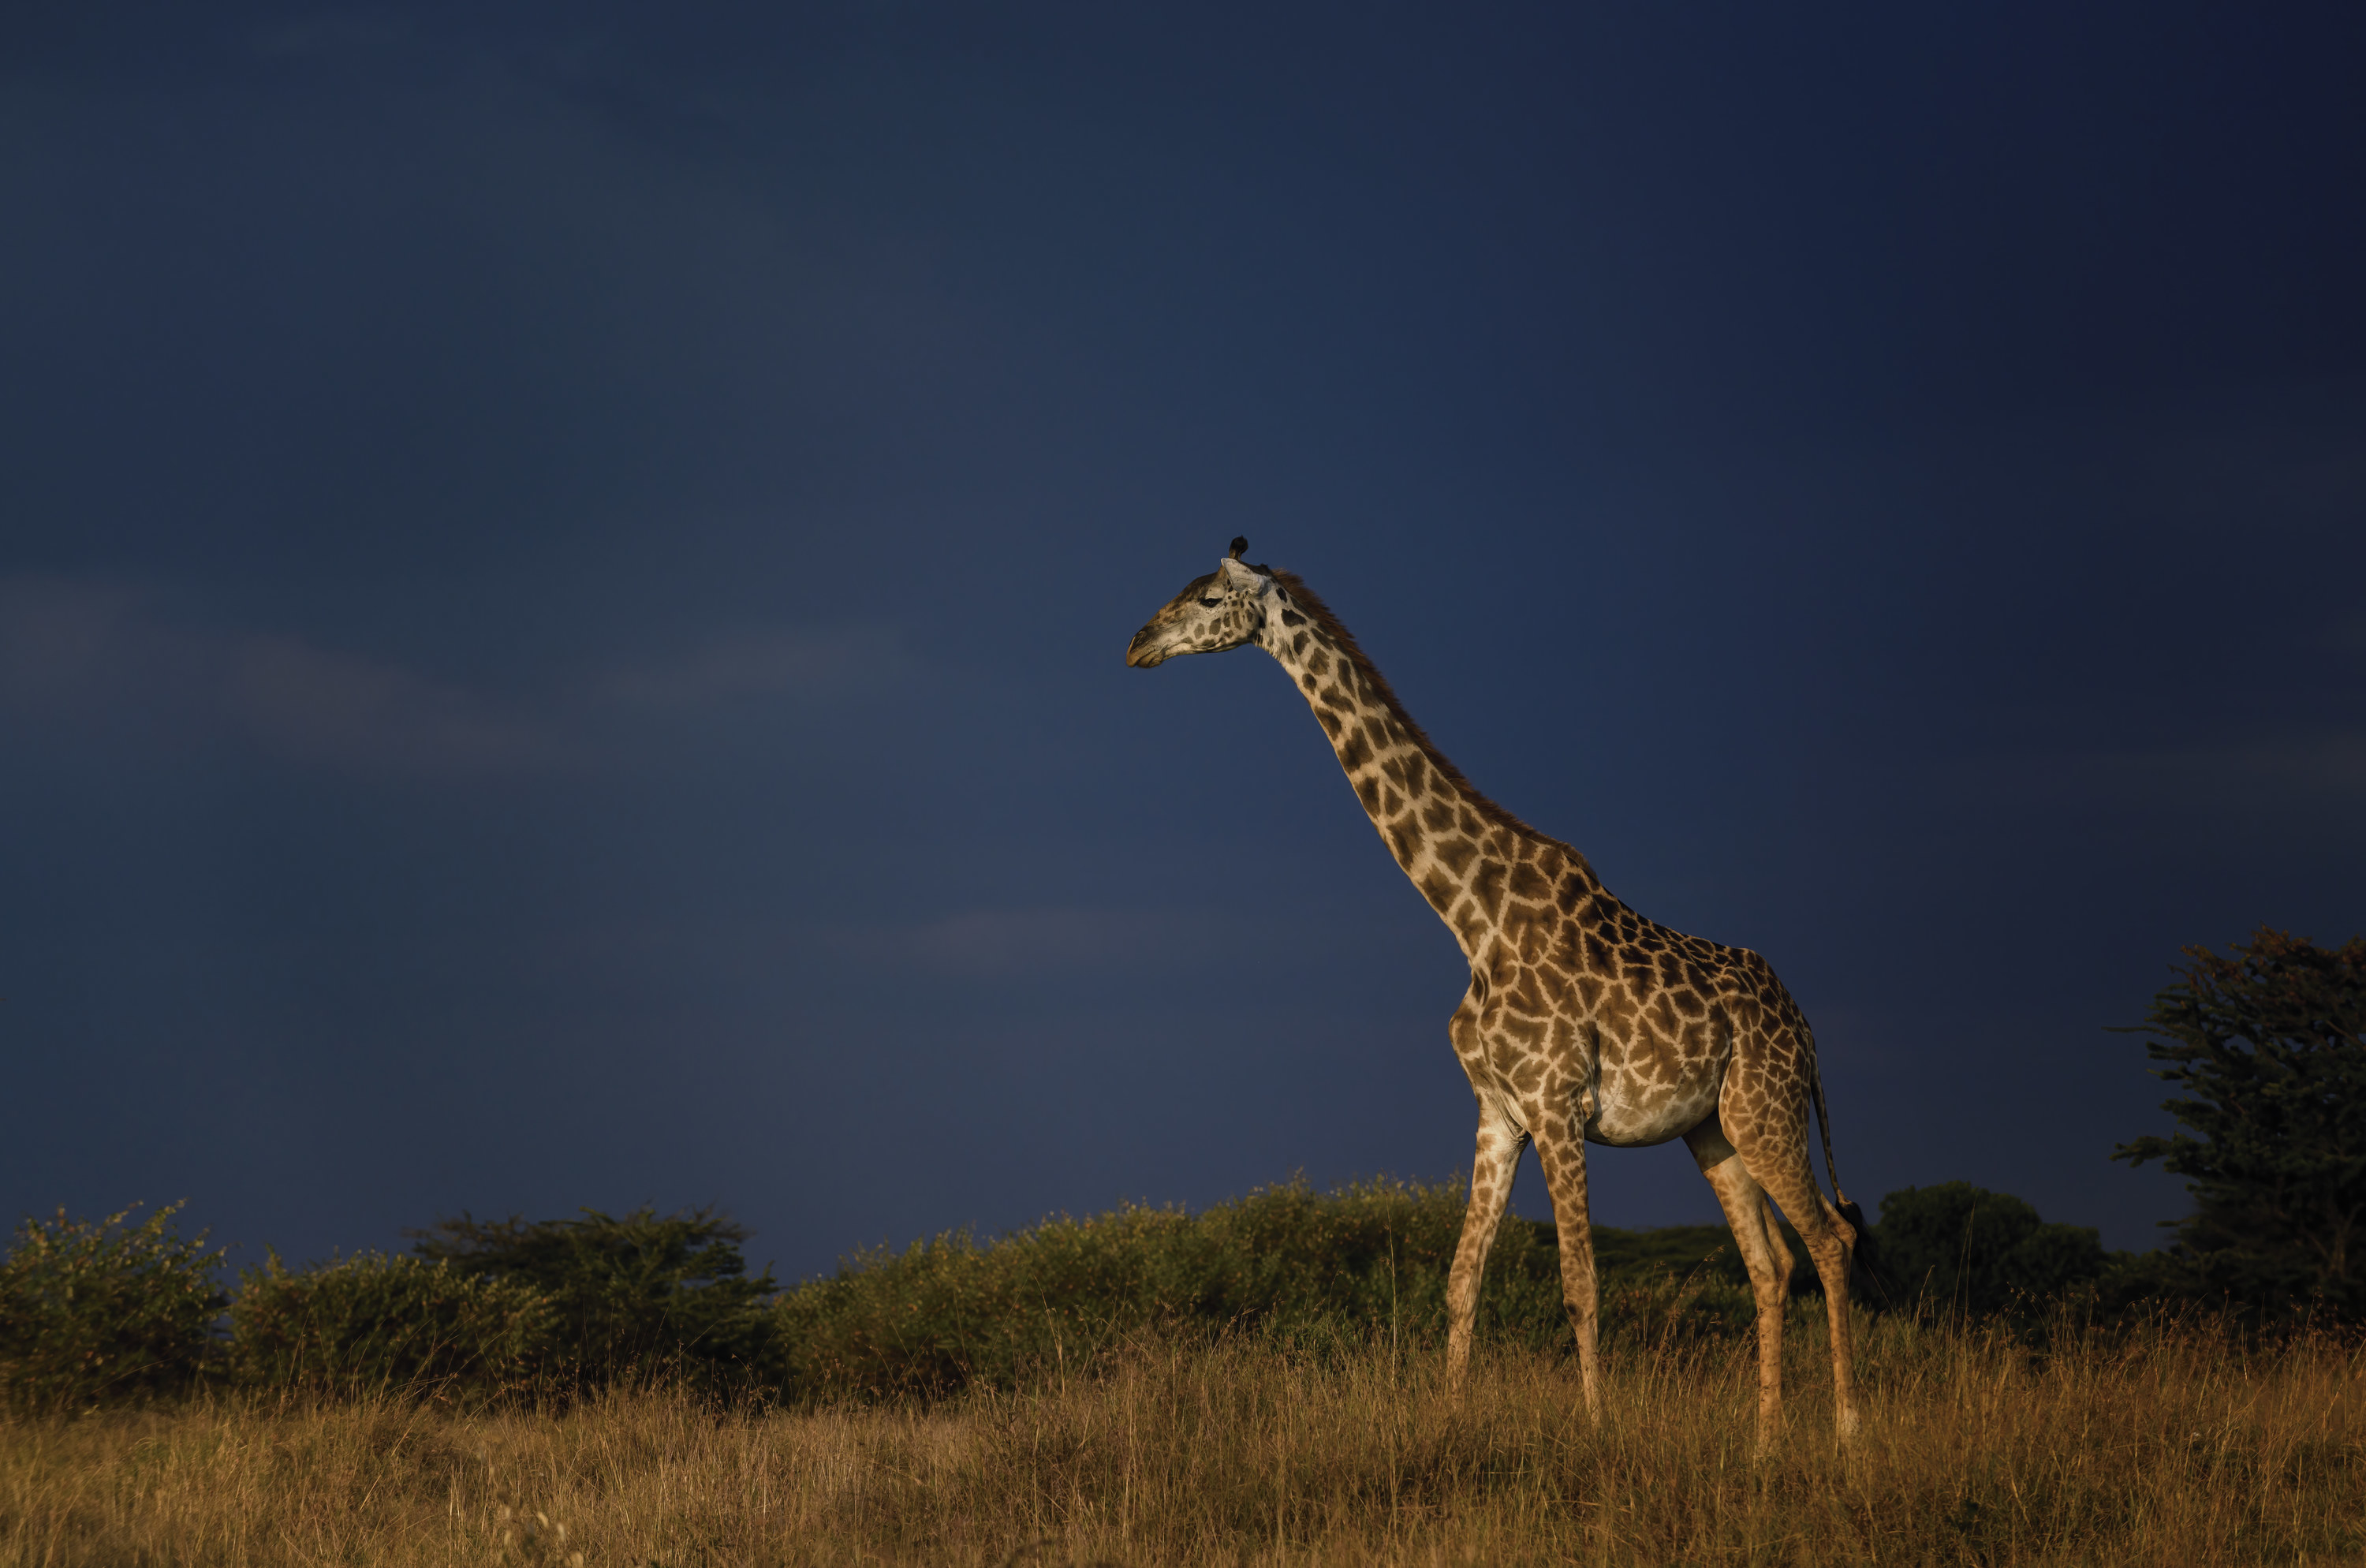 A late evening storm brings a dark sky enhancing the illumination of a giraffe grazing in the foreground at Maasai Mara, Kenya in July 2021.